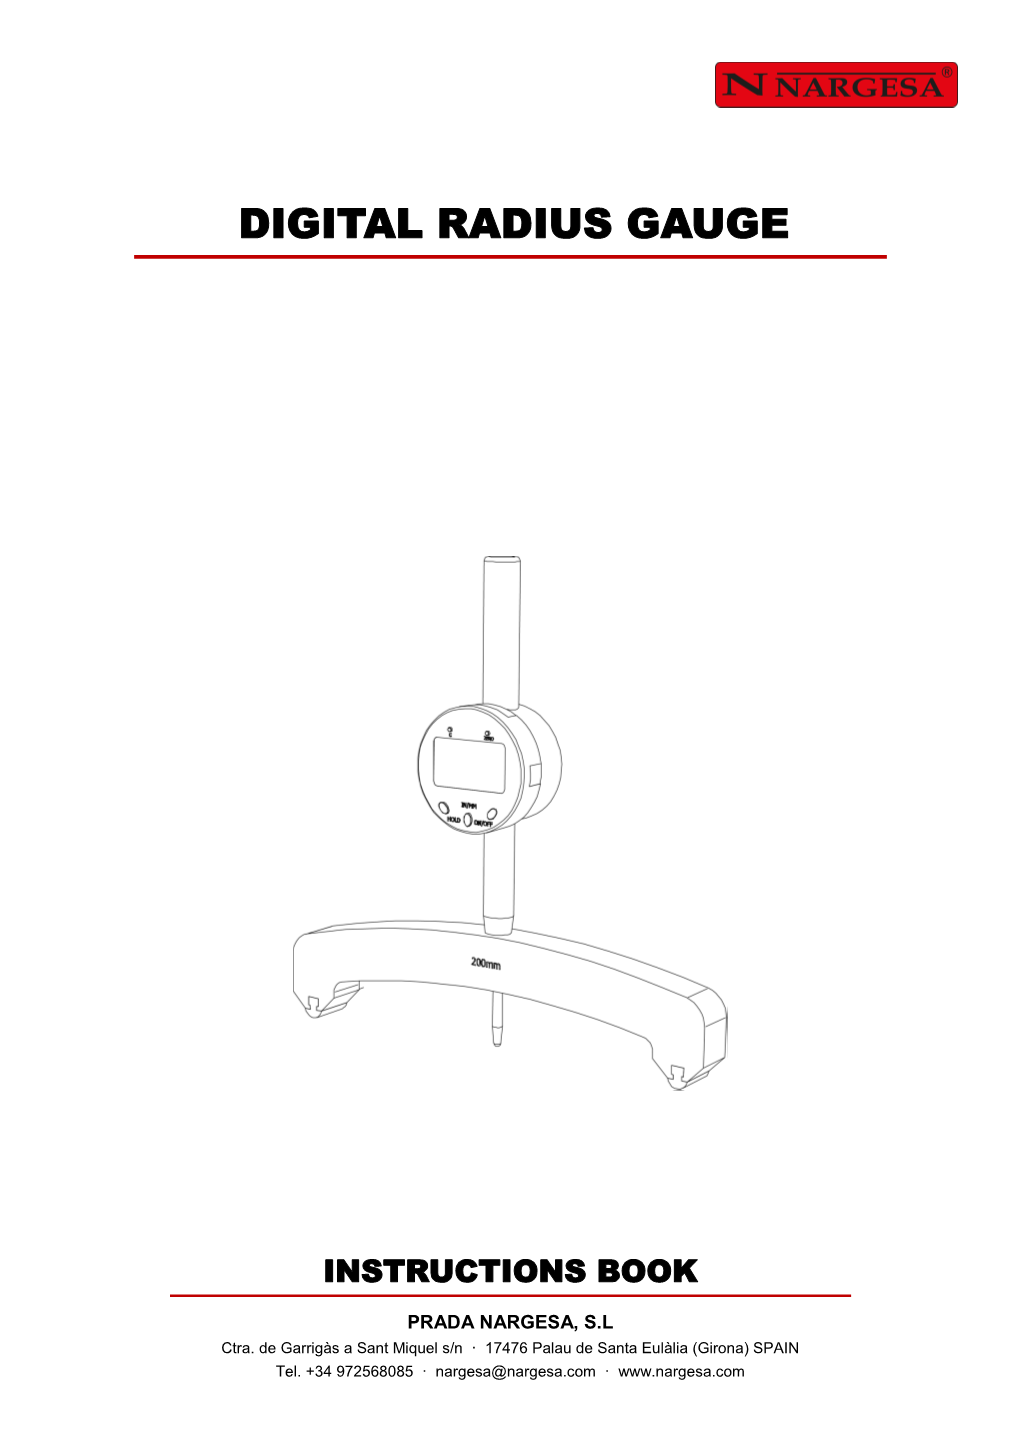 Digital Radius Gauge